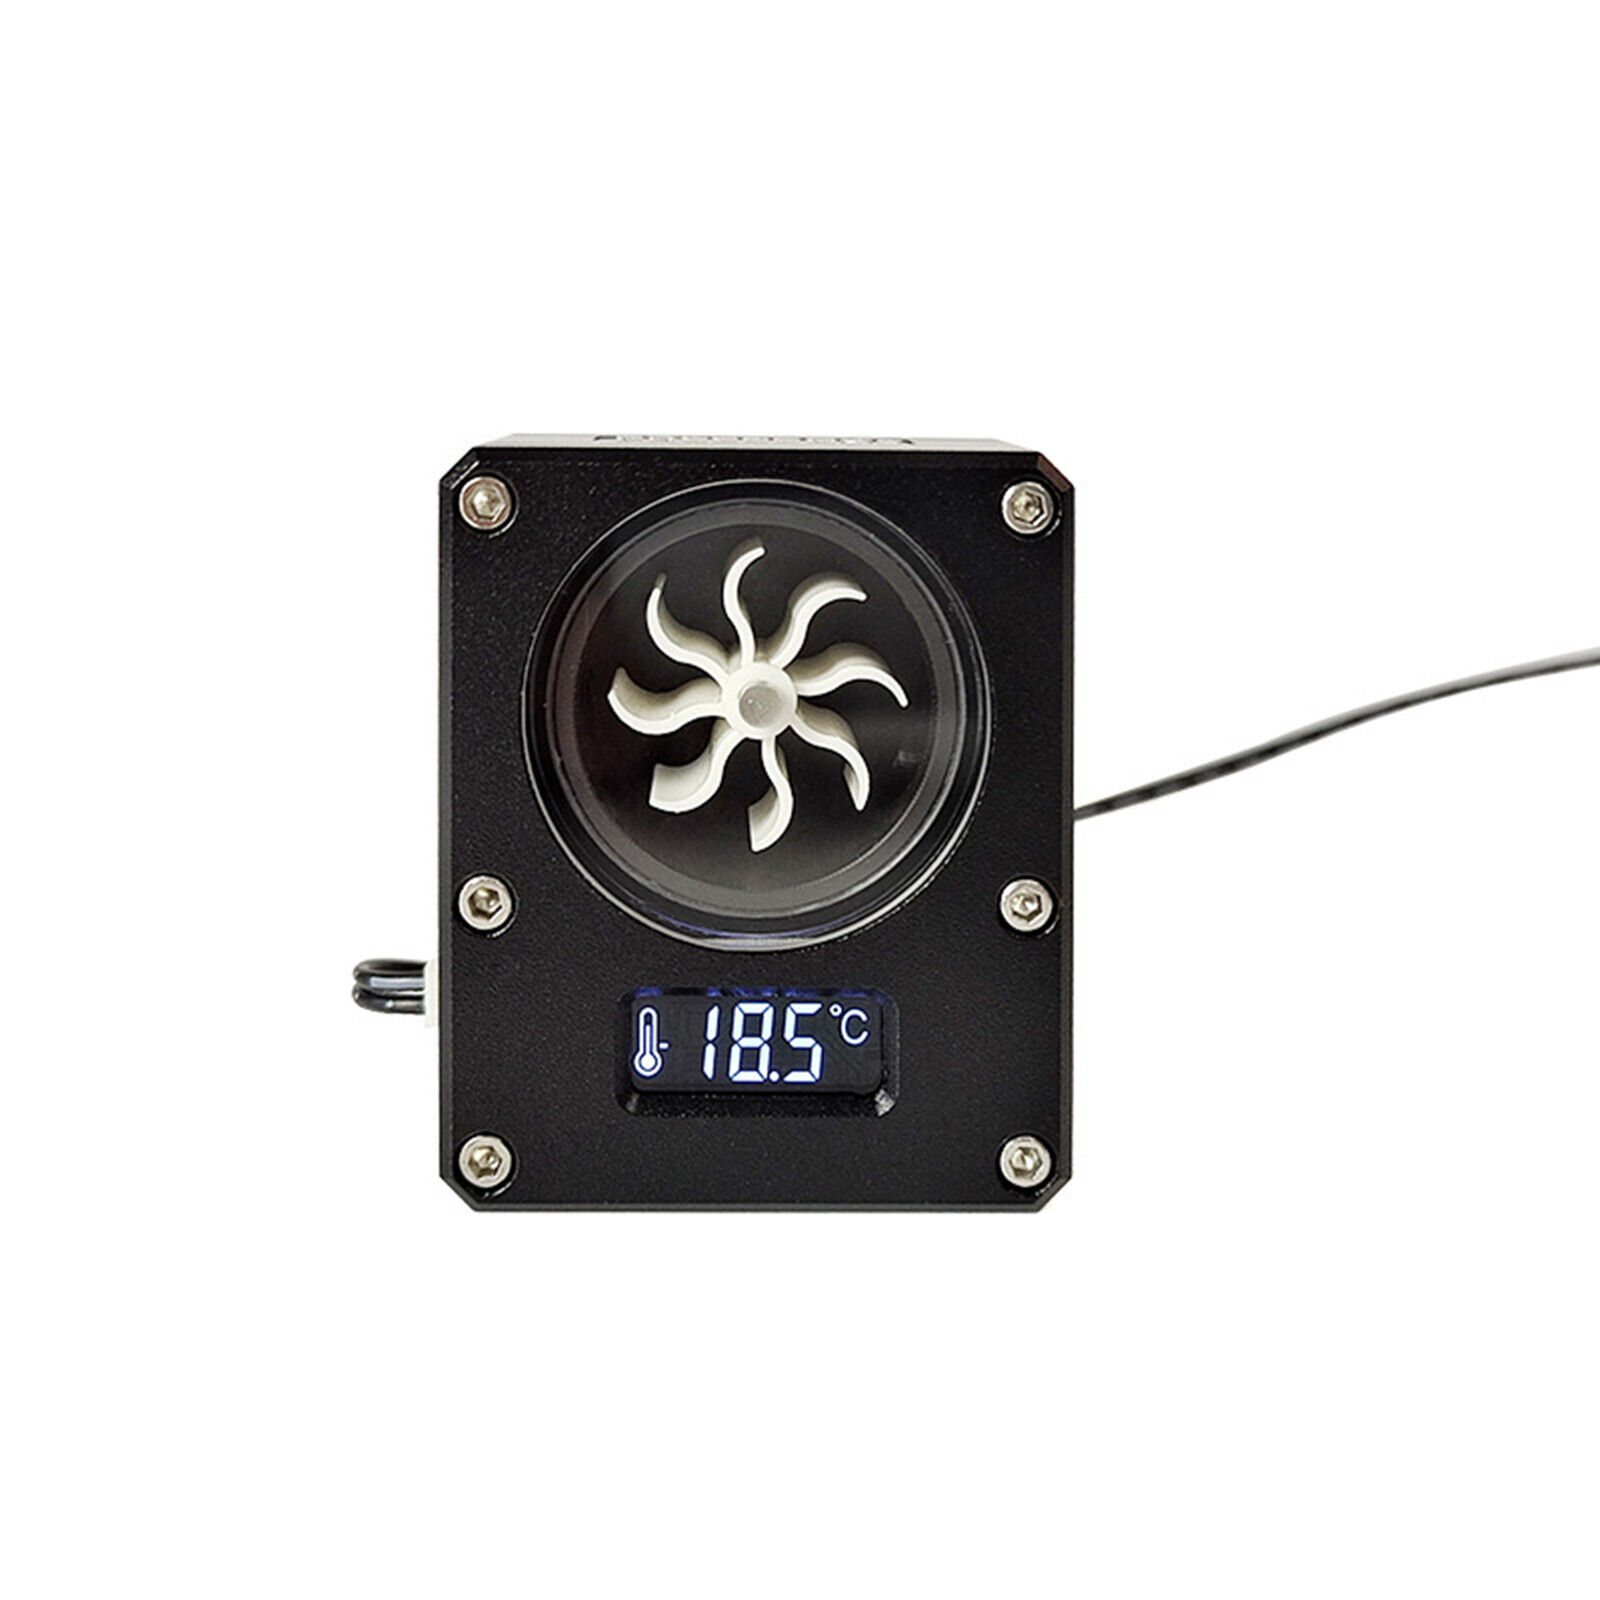 1x Computer Water Cooling Temperature Sensor System Monitor Flow Meter Indicator